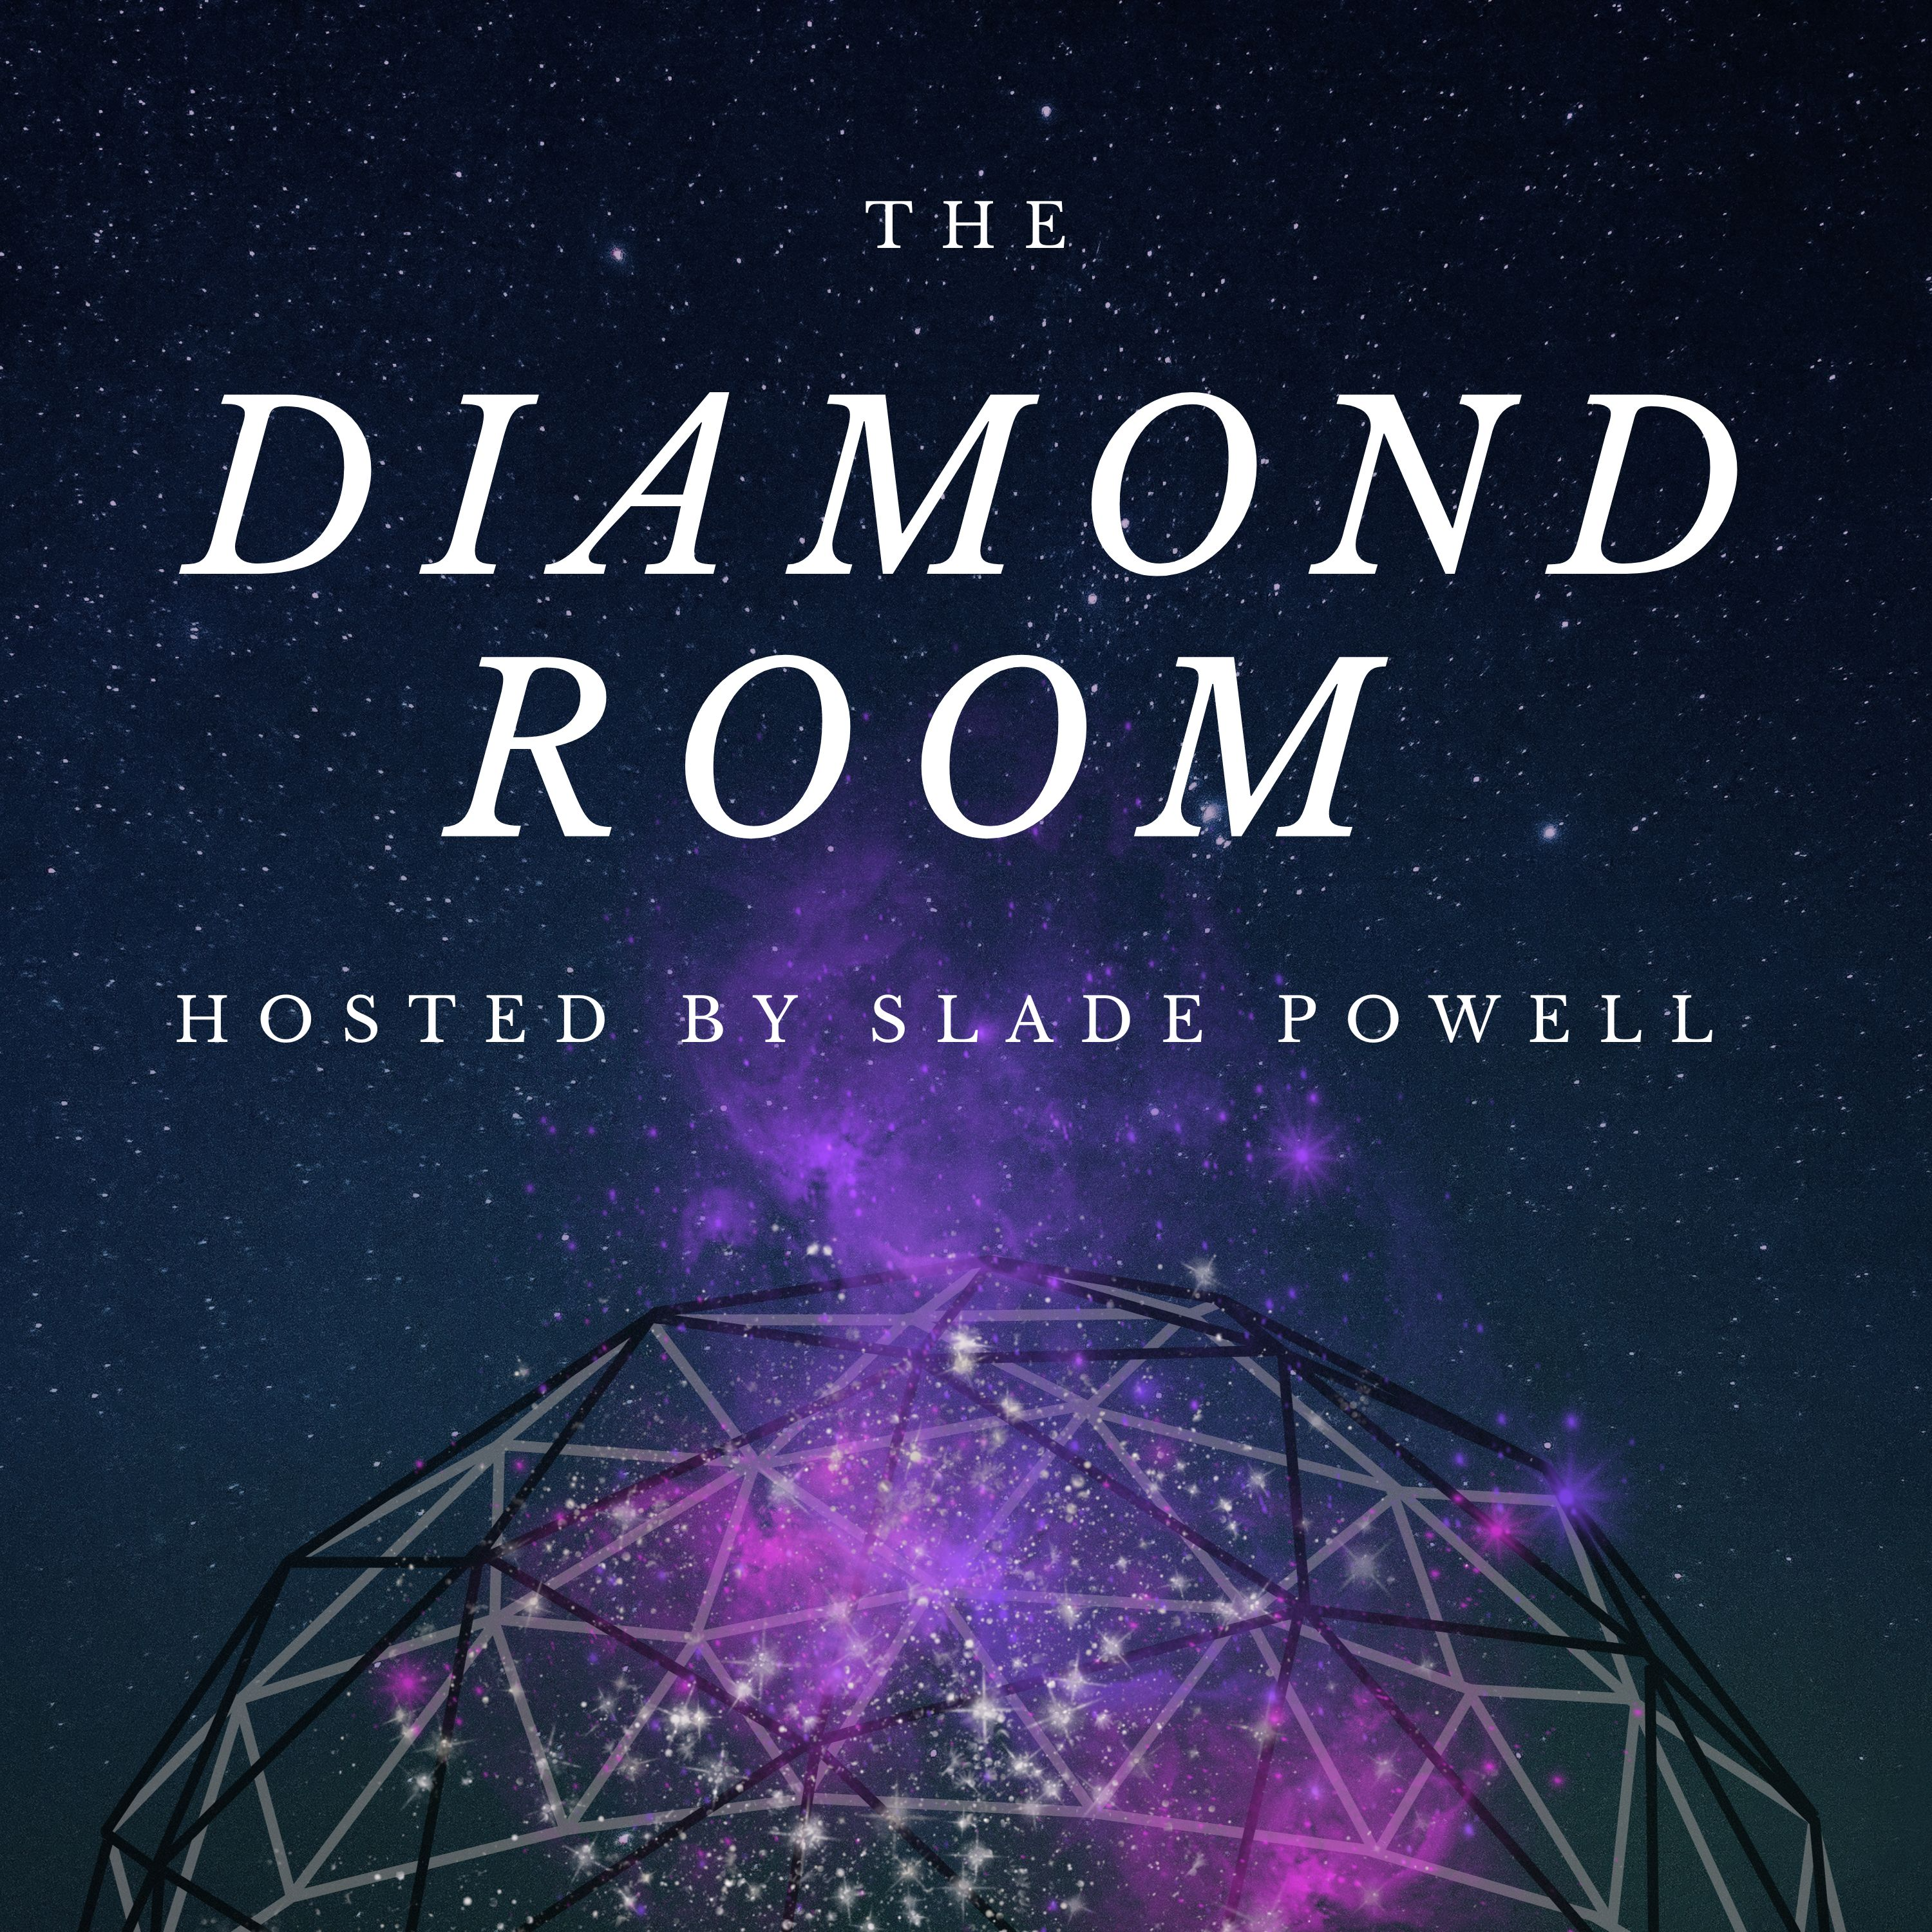 The Diamond Room